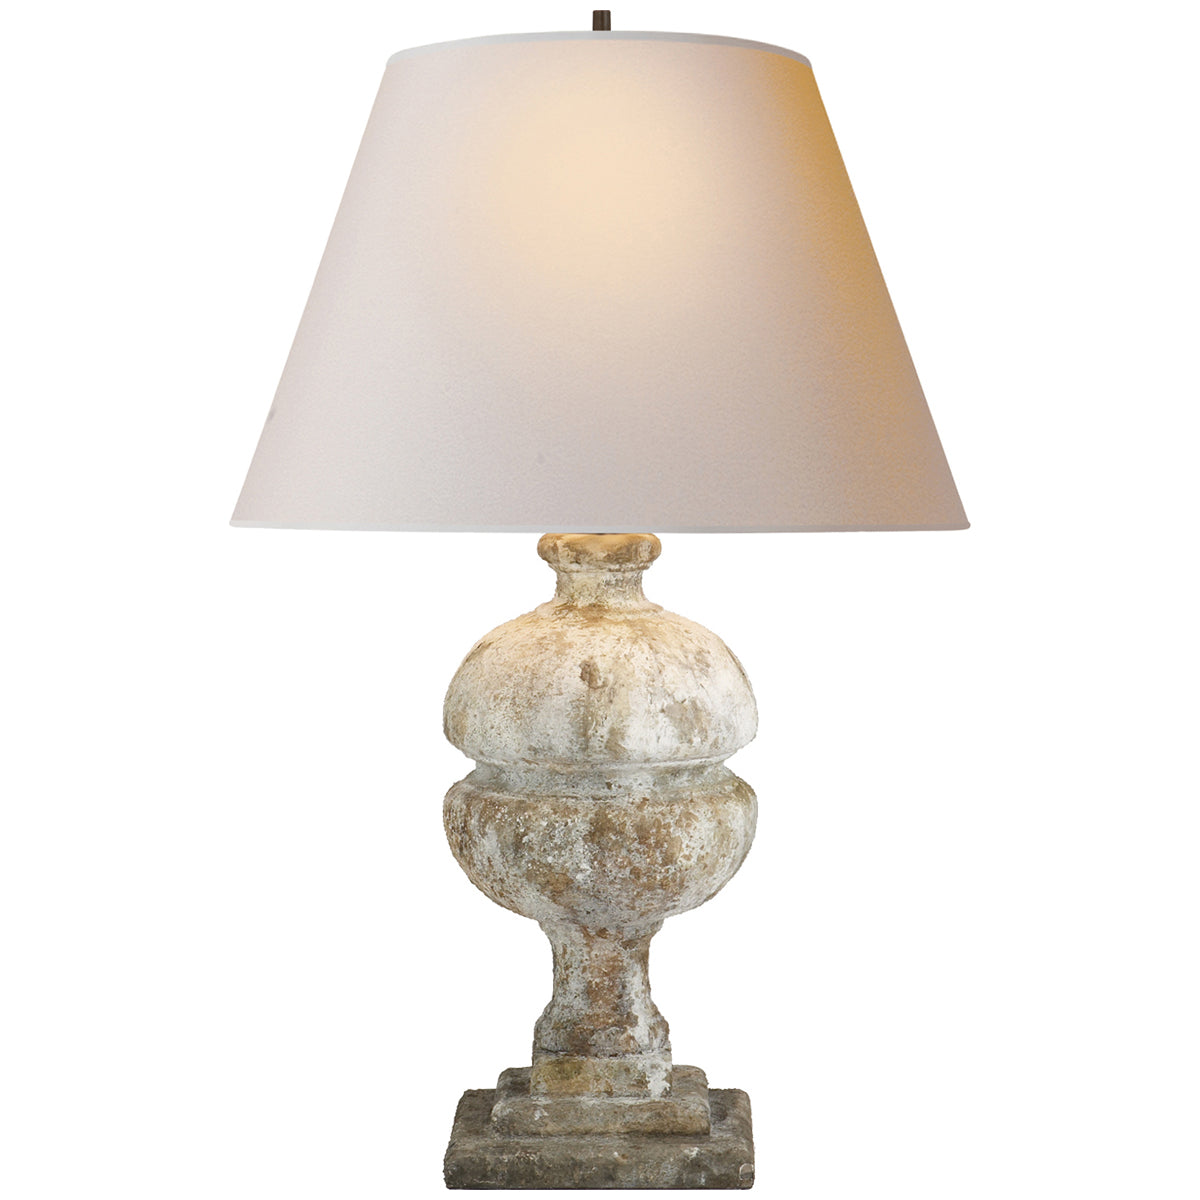 Visual Comfort Desmond Table Lamp in Garden Stone